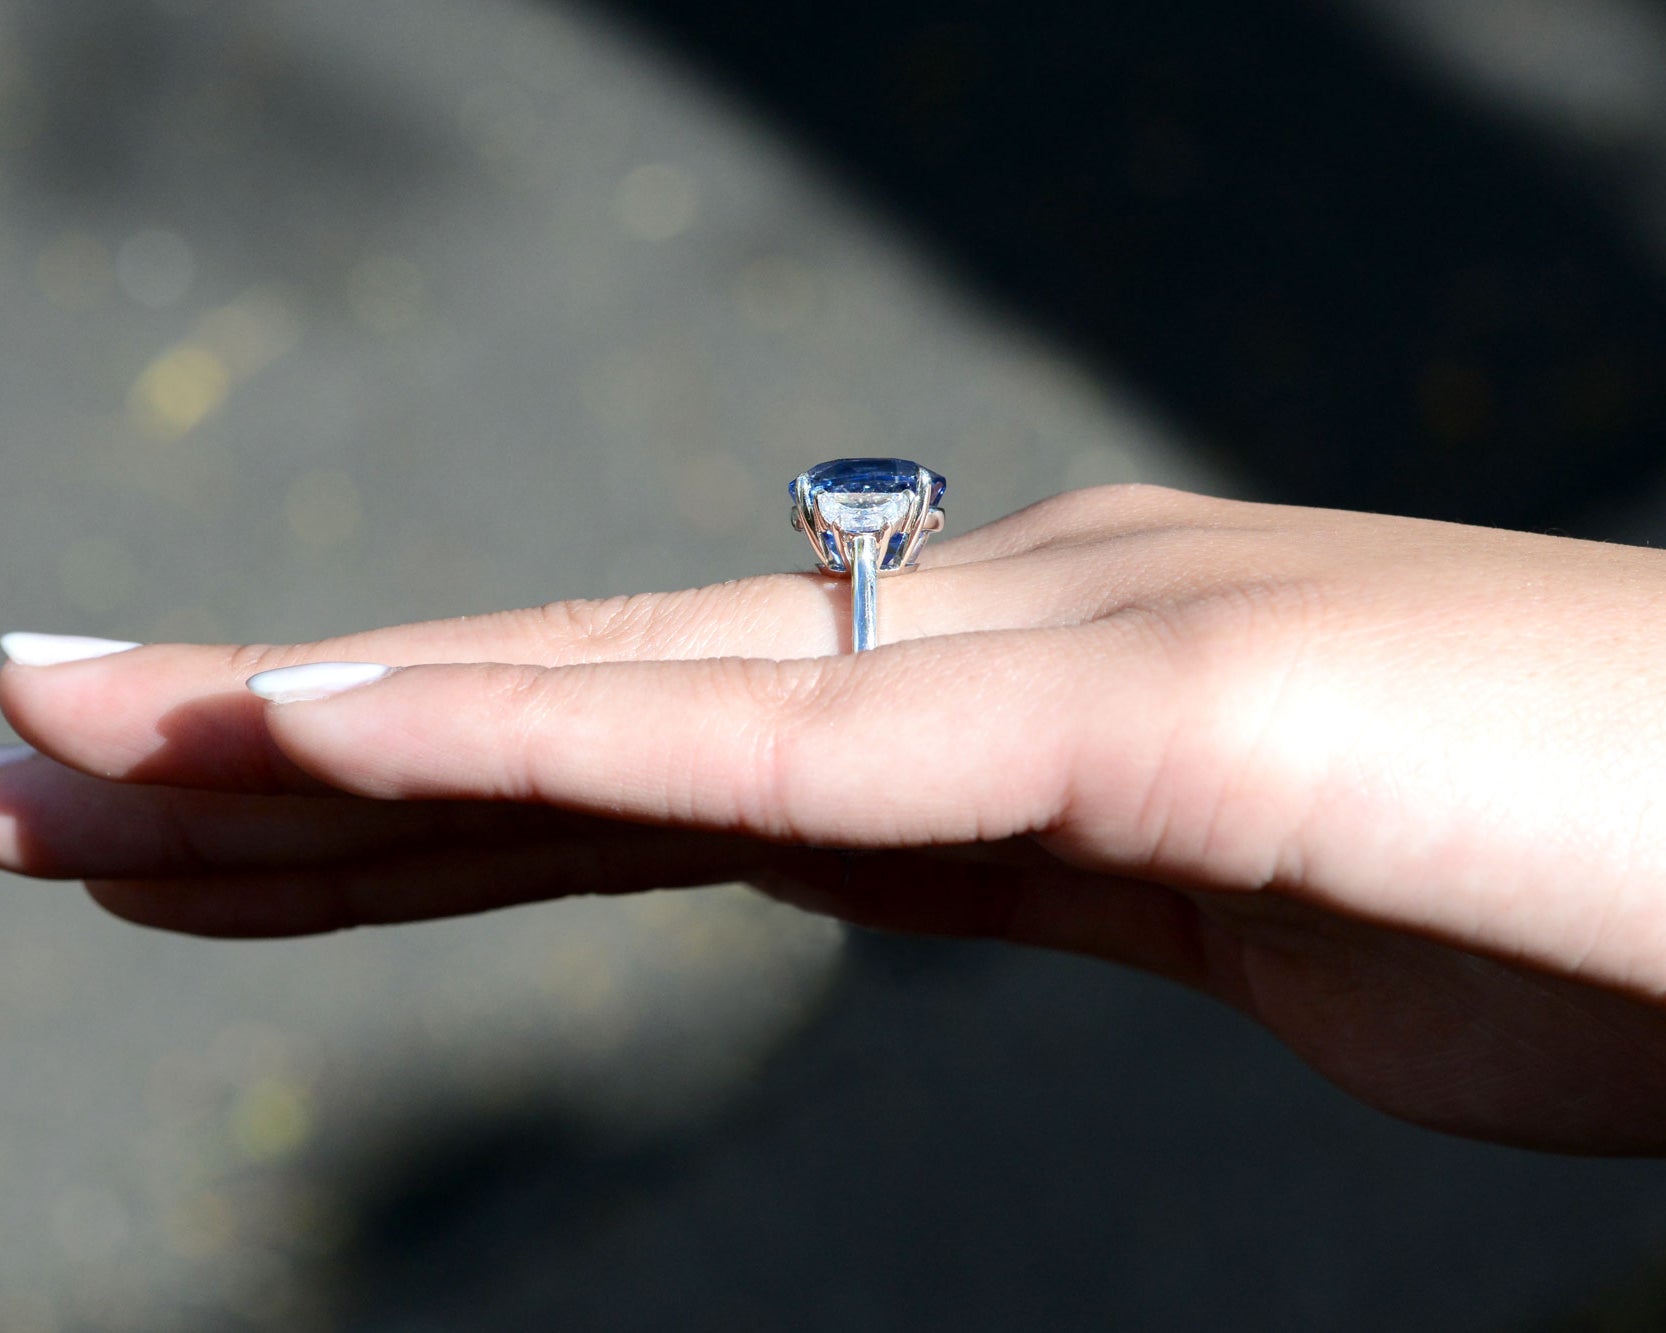 Estate 10 Carat Sri Lanka Sapphire Engagement Ring